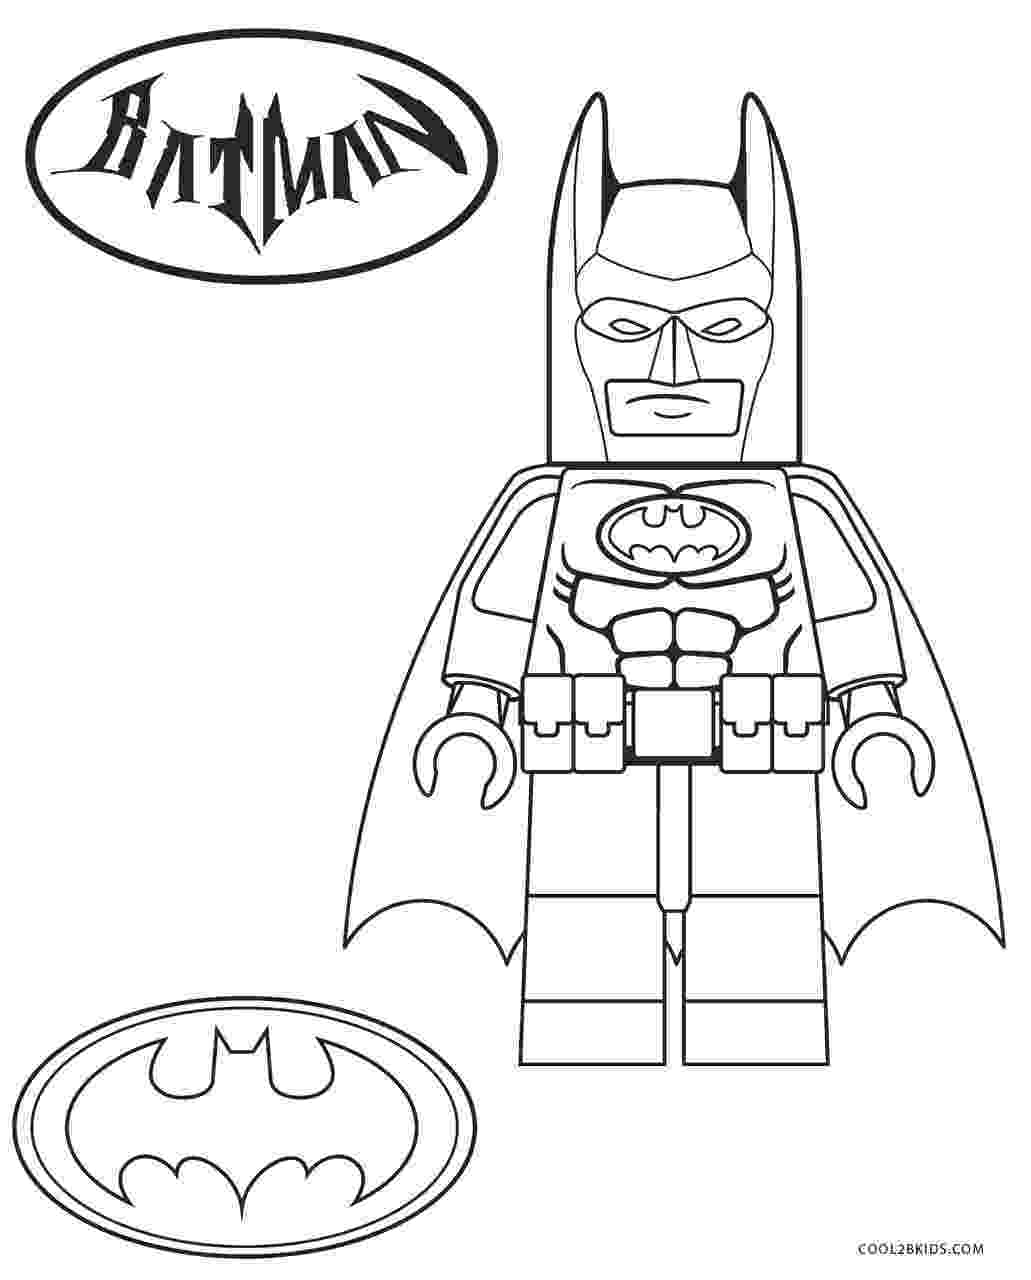 printable lego batman coloring pages lego batman coloring pages best coloring pages for kids batman lego printable pages coloring 